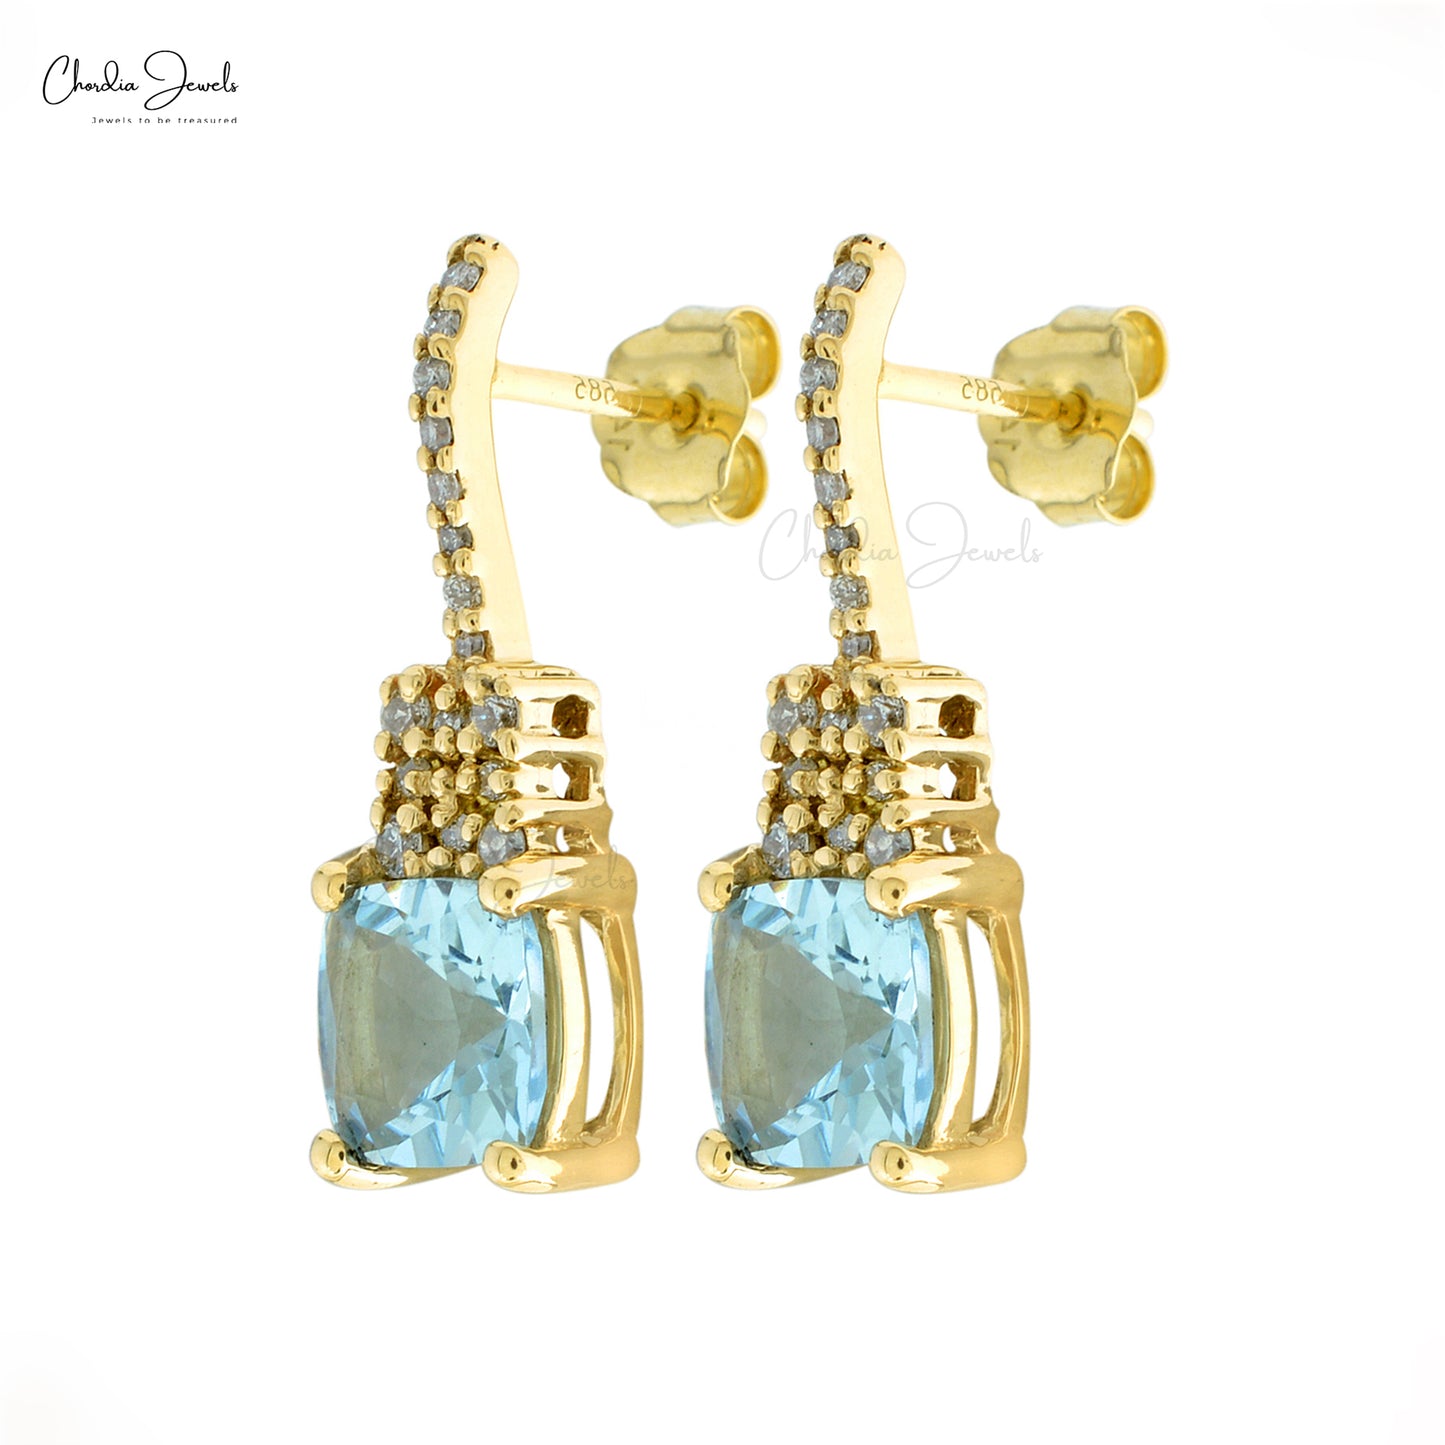 Genuine Aquamarine 14k Solid Yellow Gold Diamond Earrings 6mm Cushion Cut Gemstone Dangle Earrings For Her